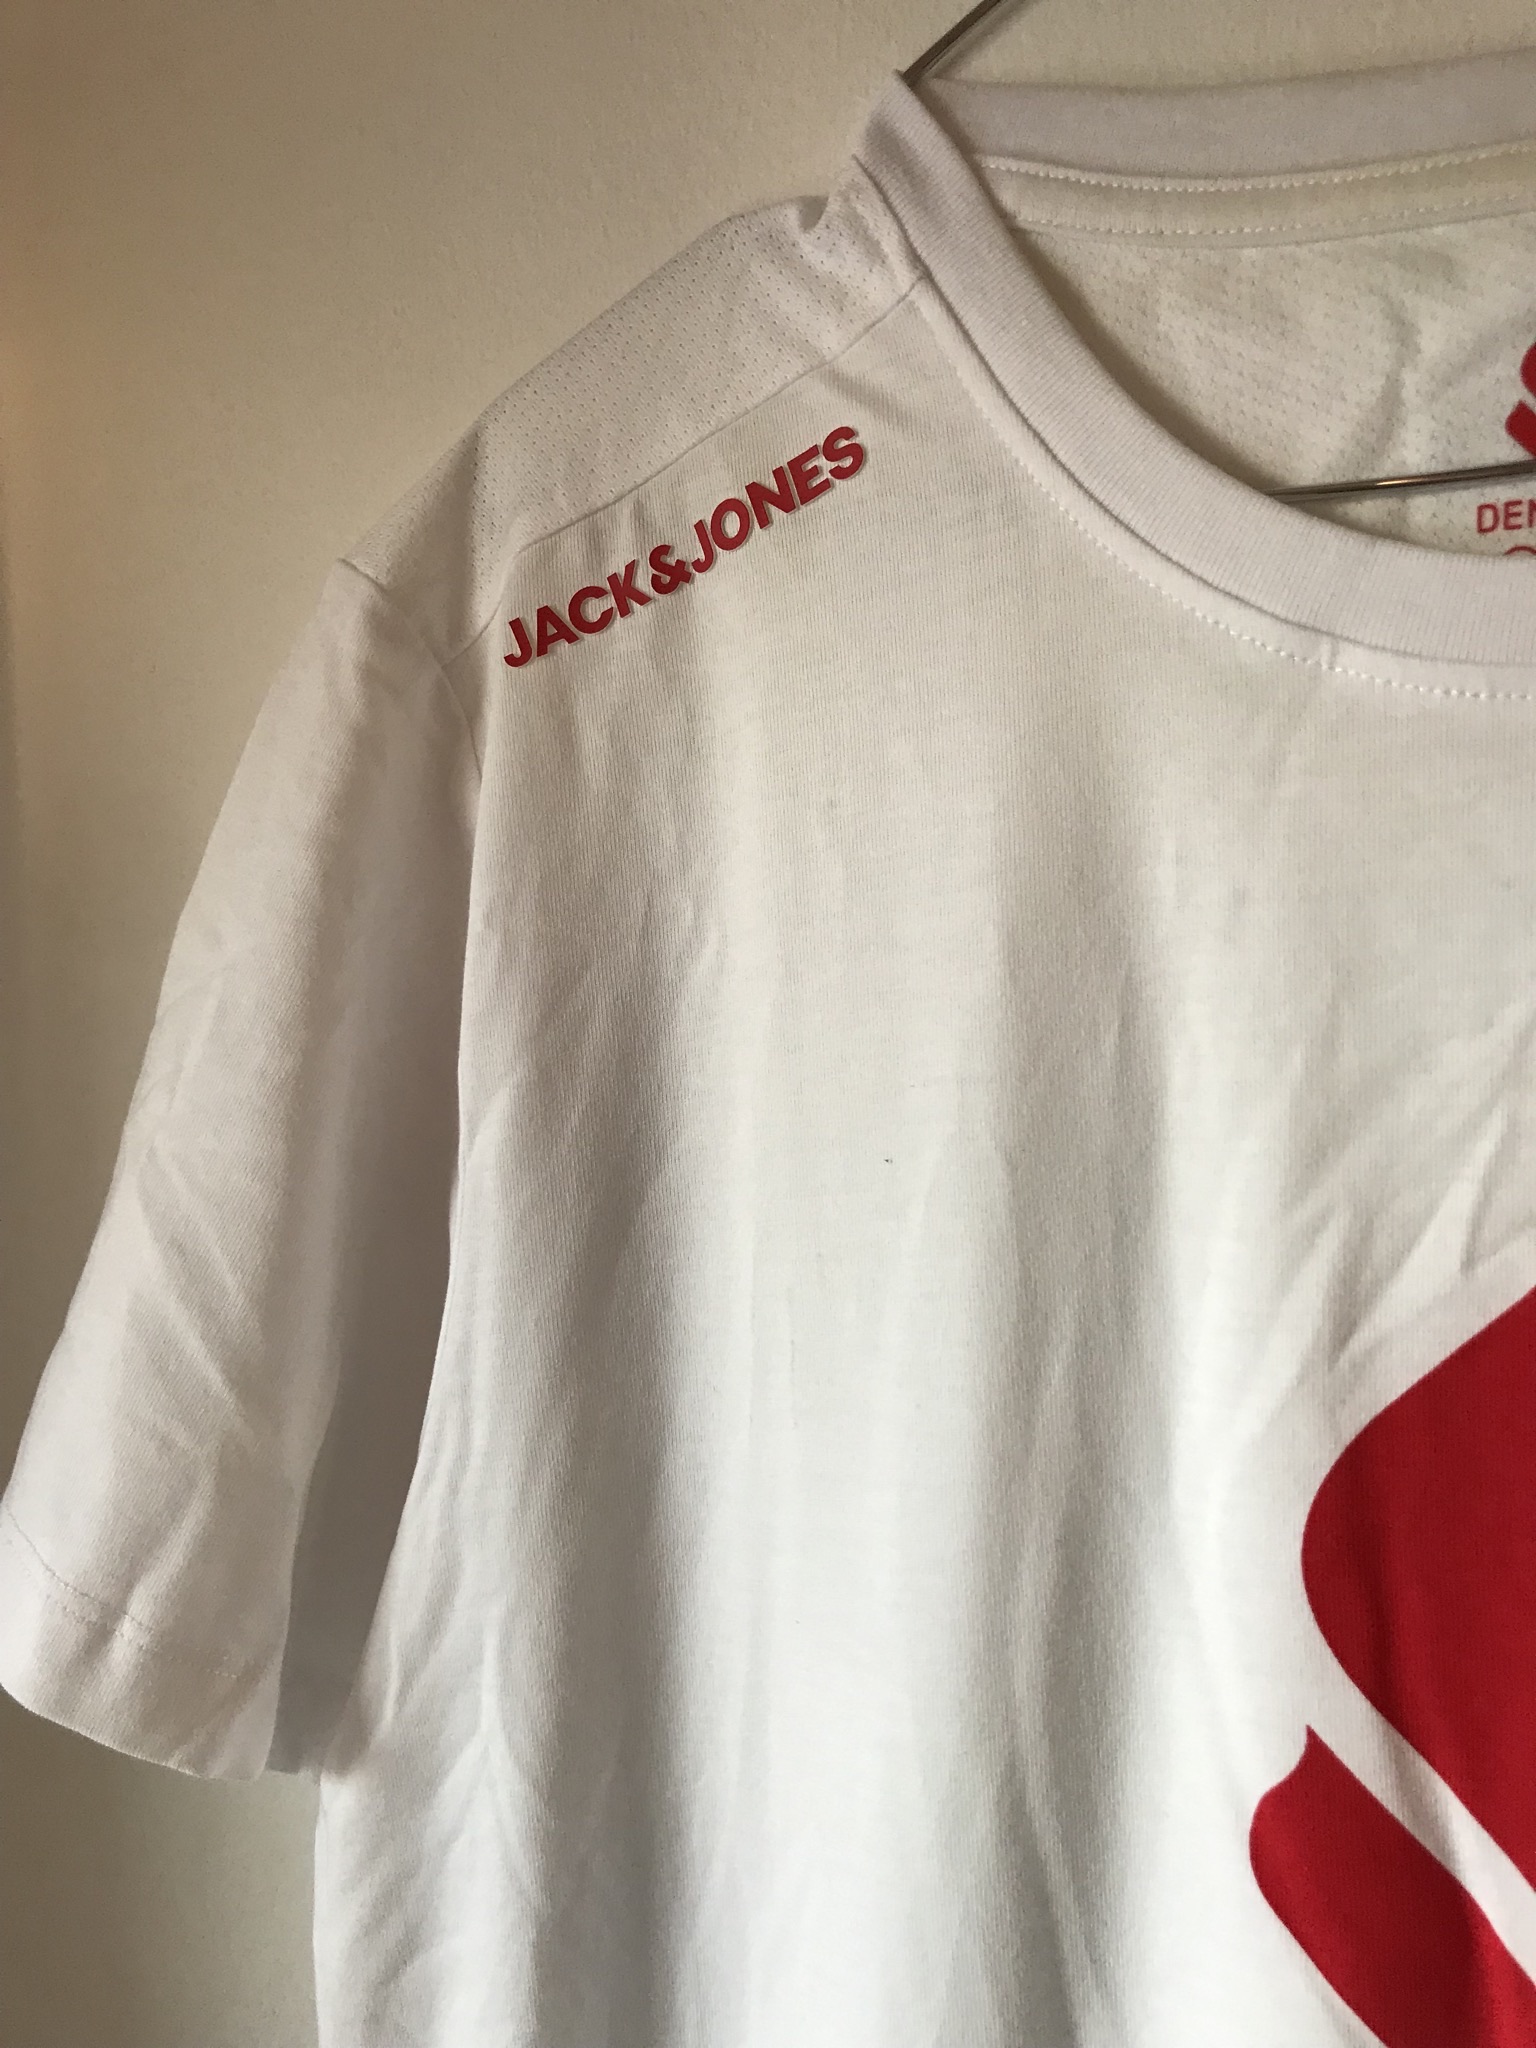 Jack  Jones t-shirt